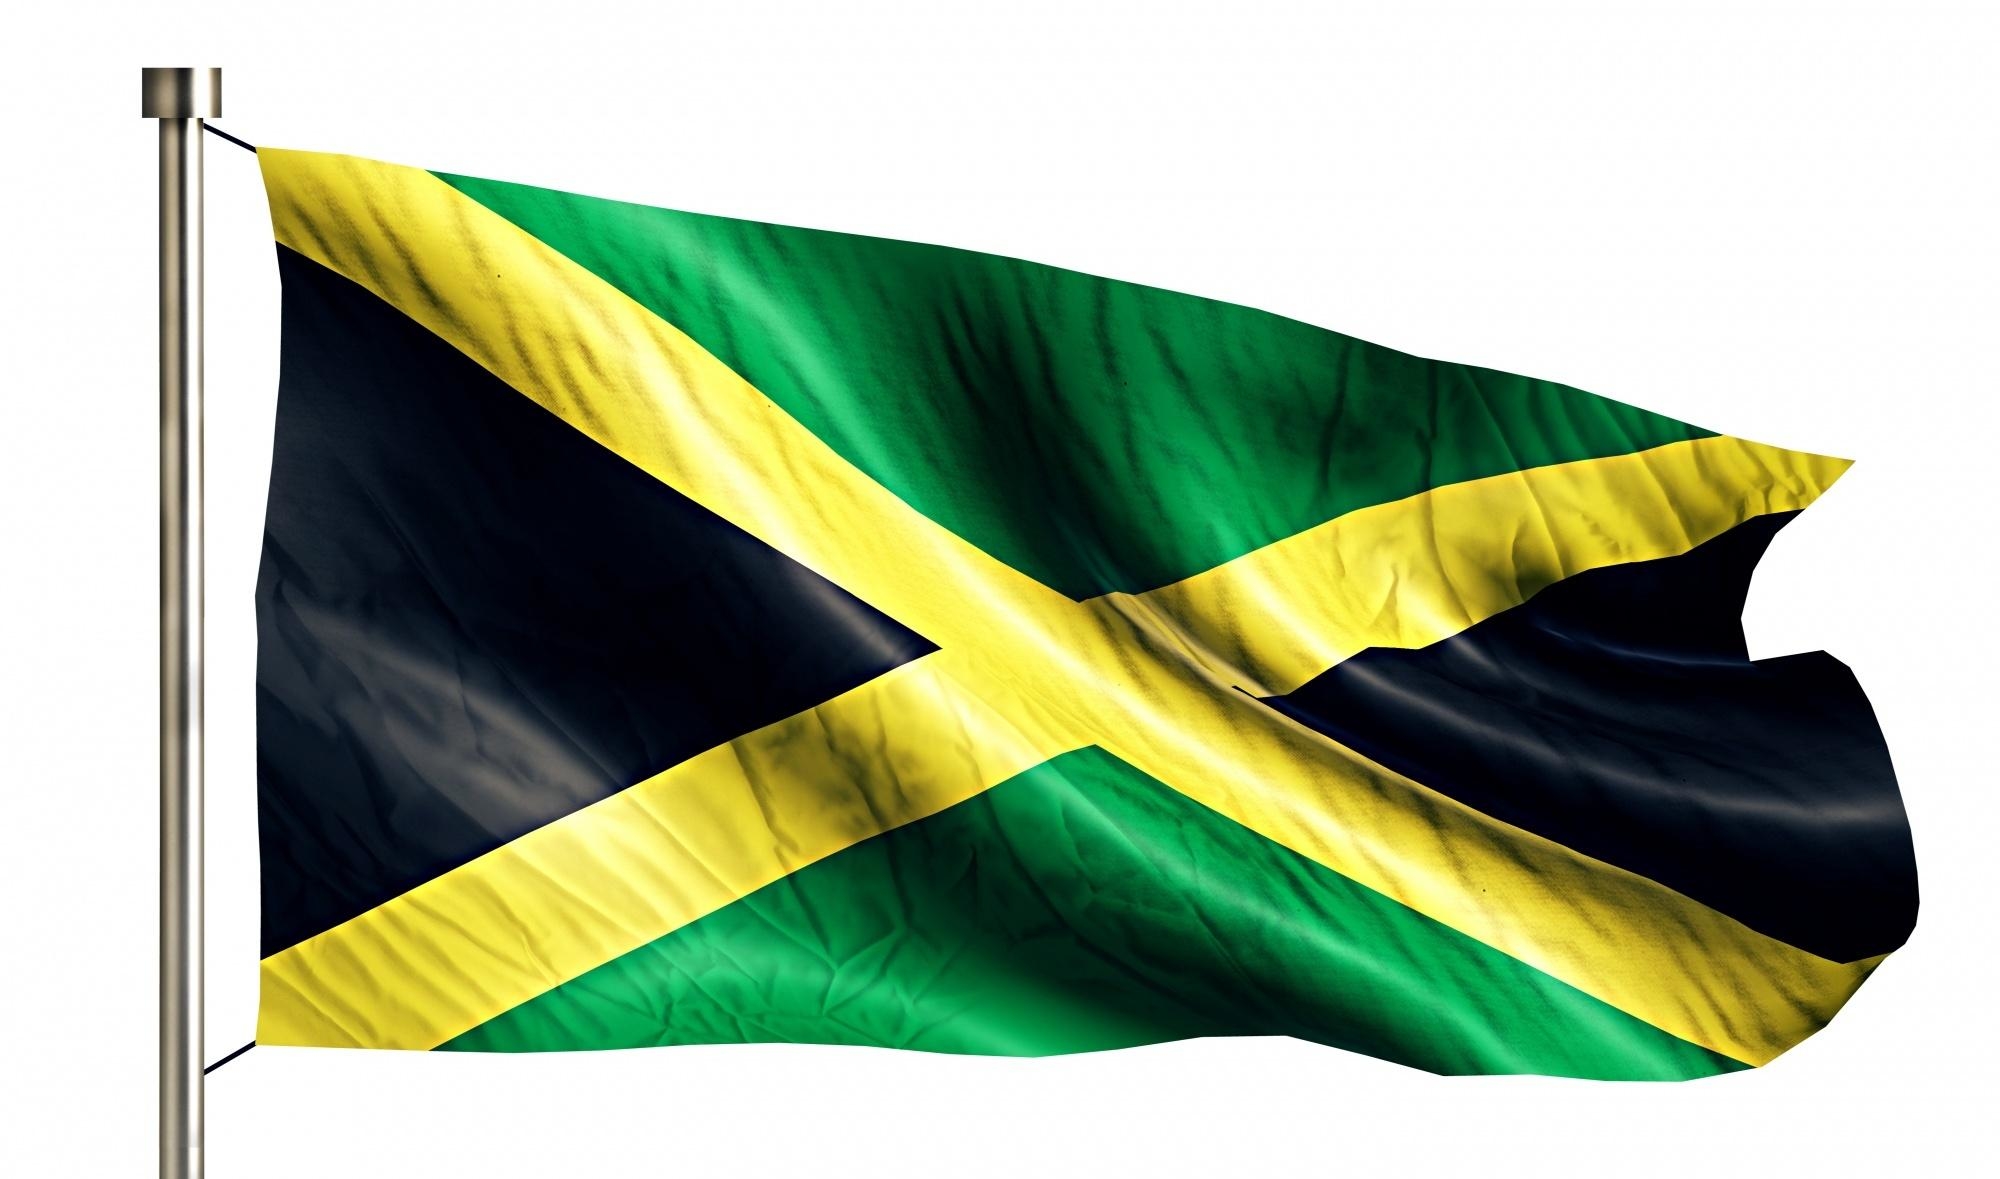 Main reasons visas in Jamaica get denied